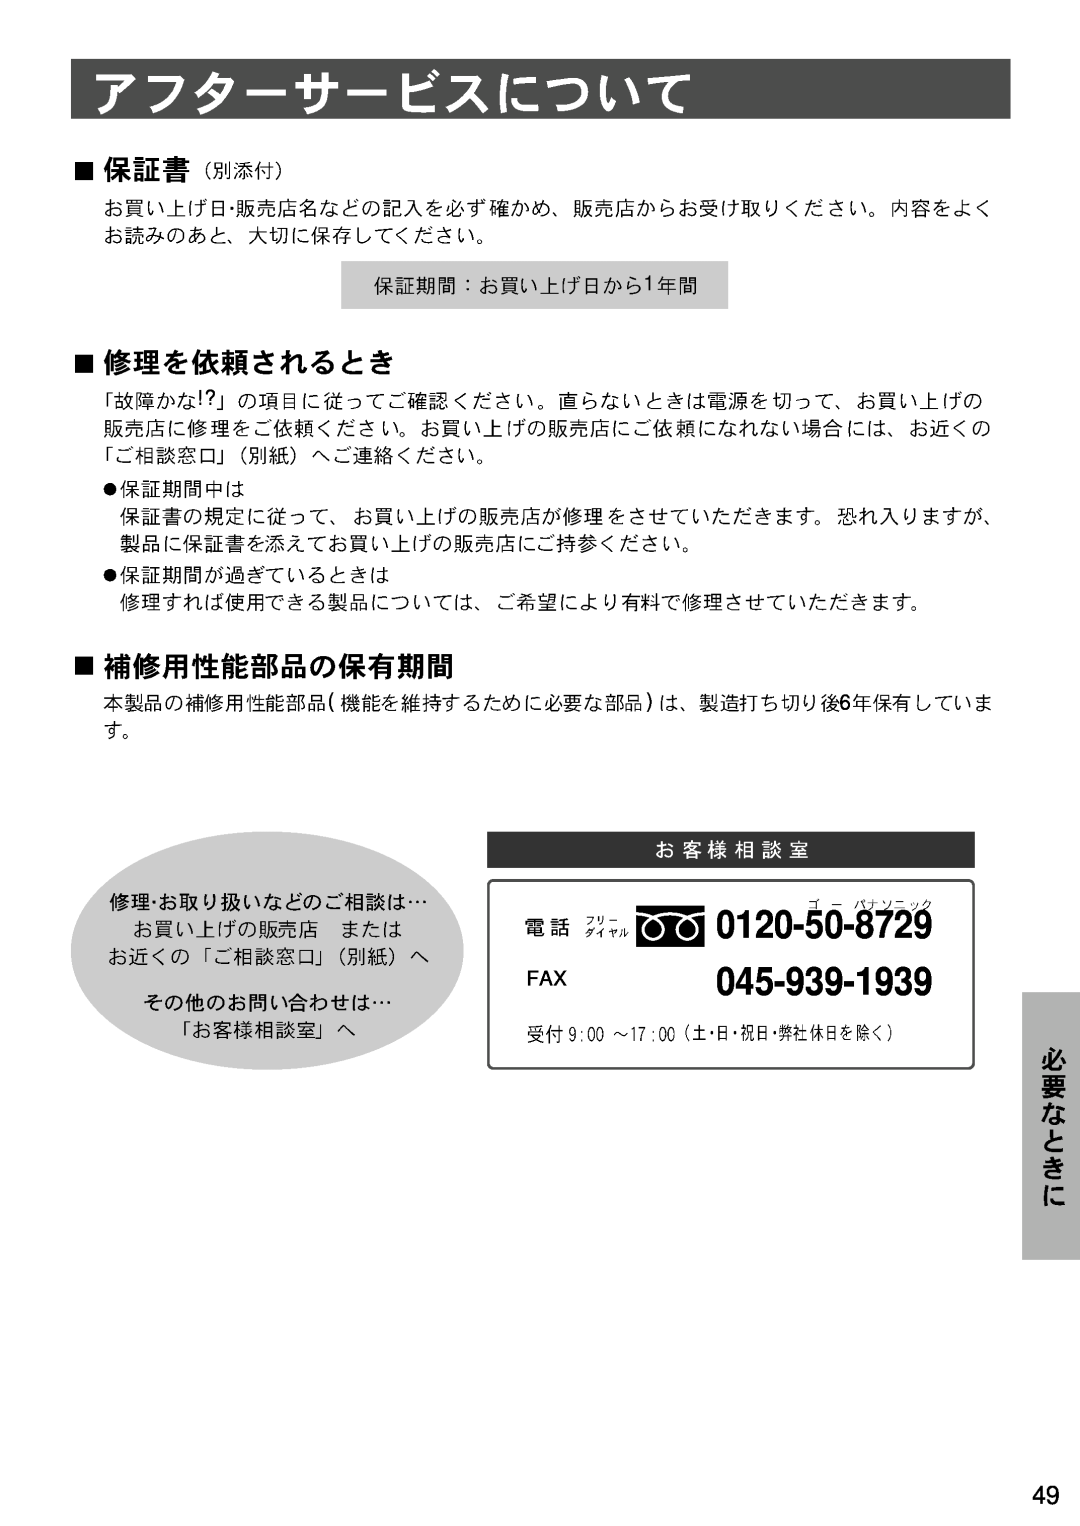 Panasonic CQ-VX3300D manual 70120-50-8729 FAX045-939-1939, 1 ? 